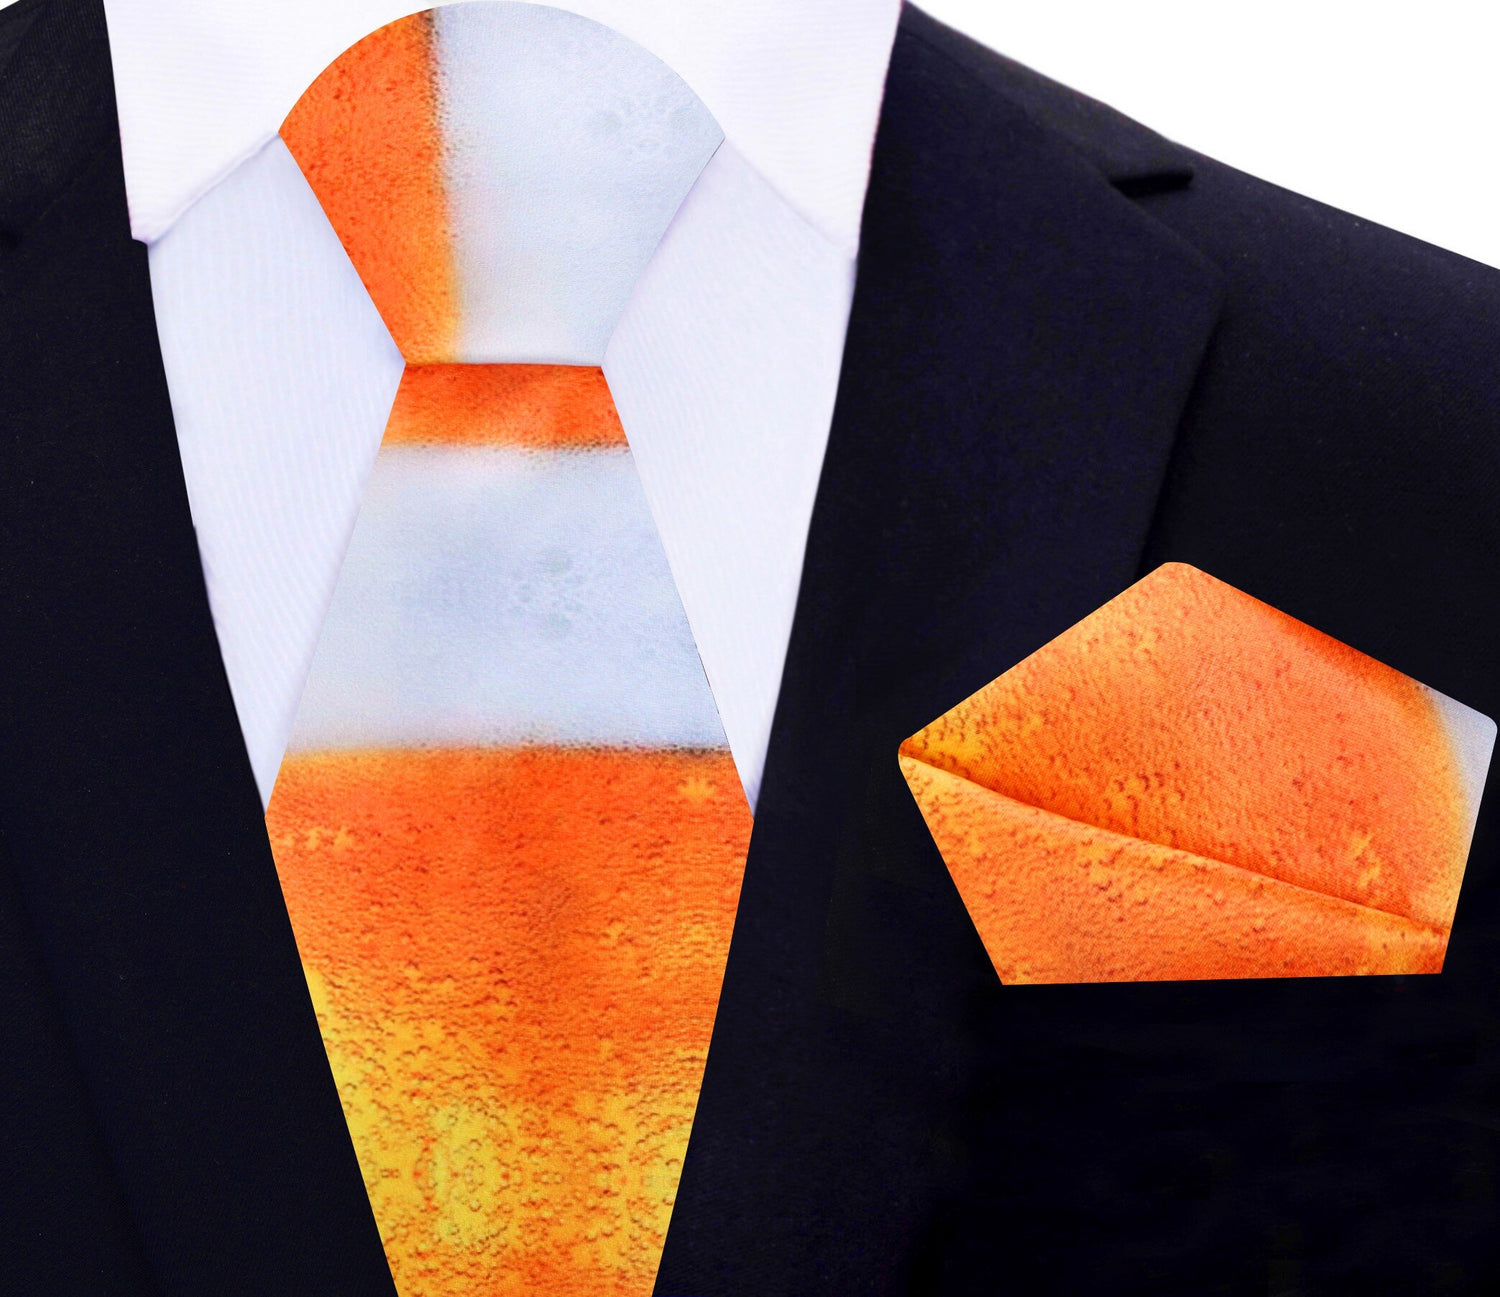 Main View: Orange, White Fresh Draft Beer Tie and Pocket Square